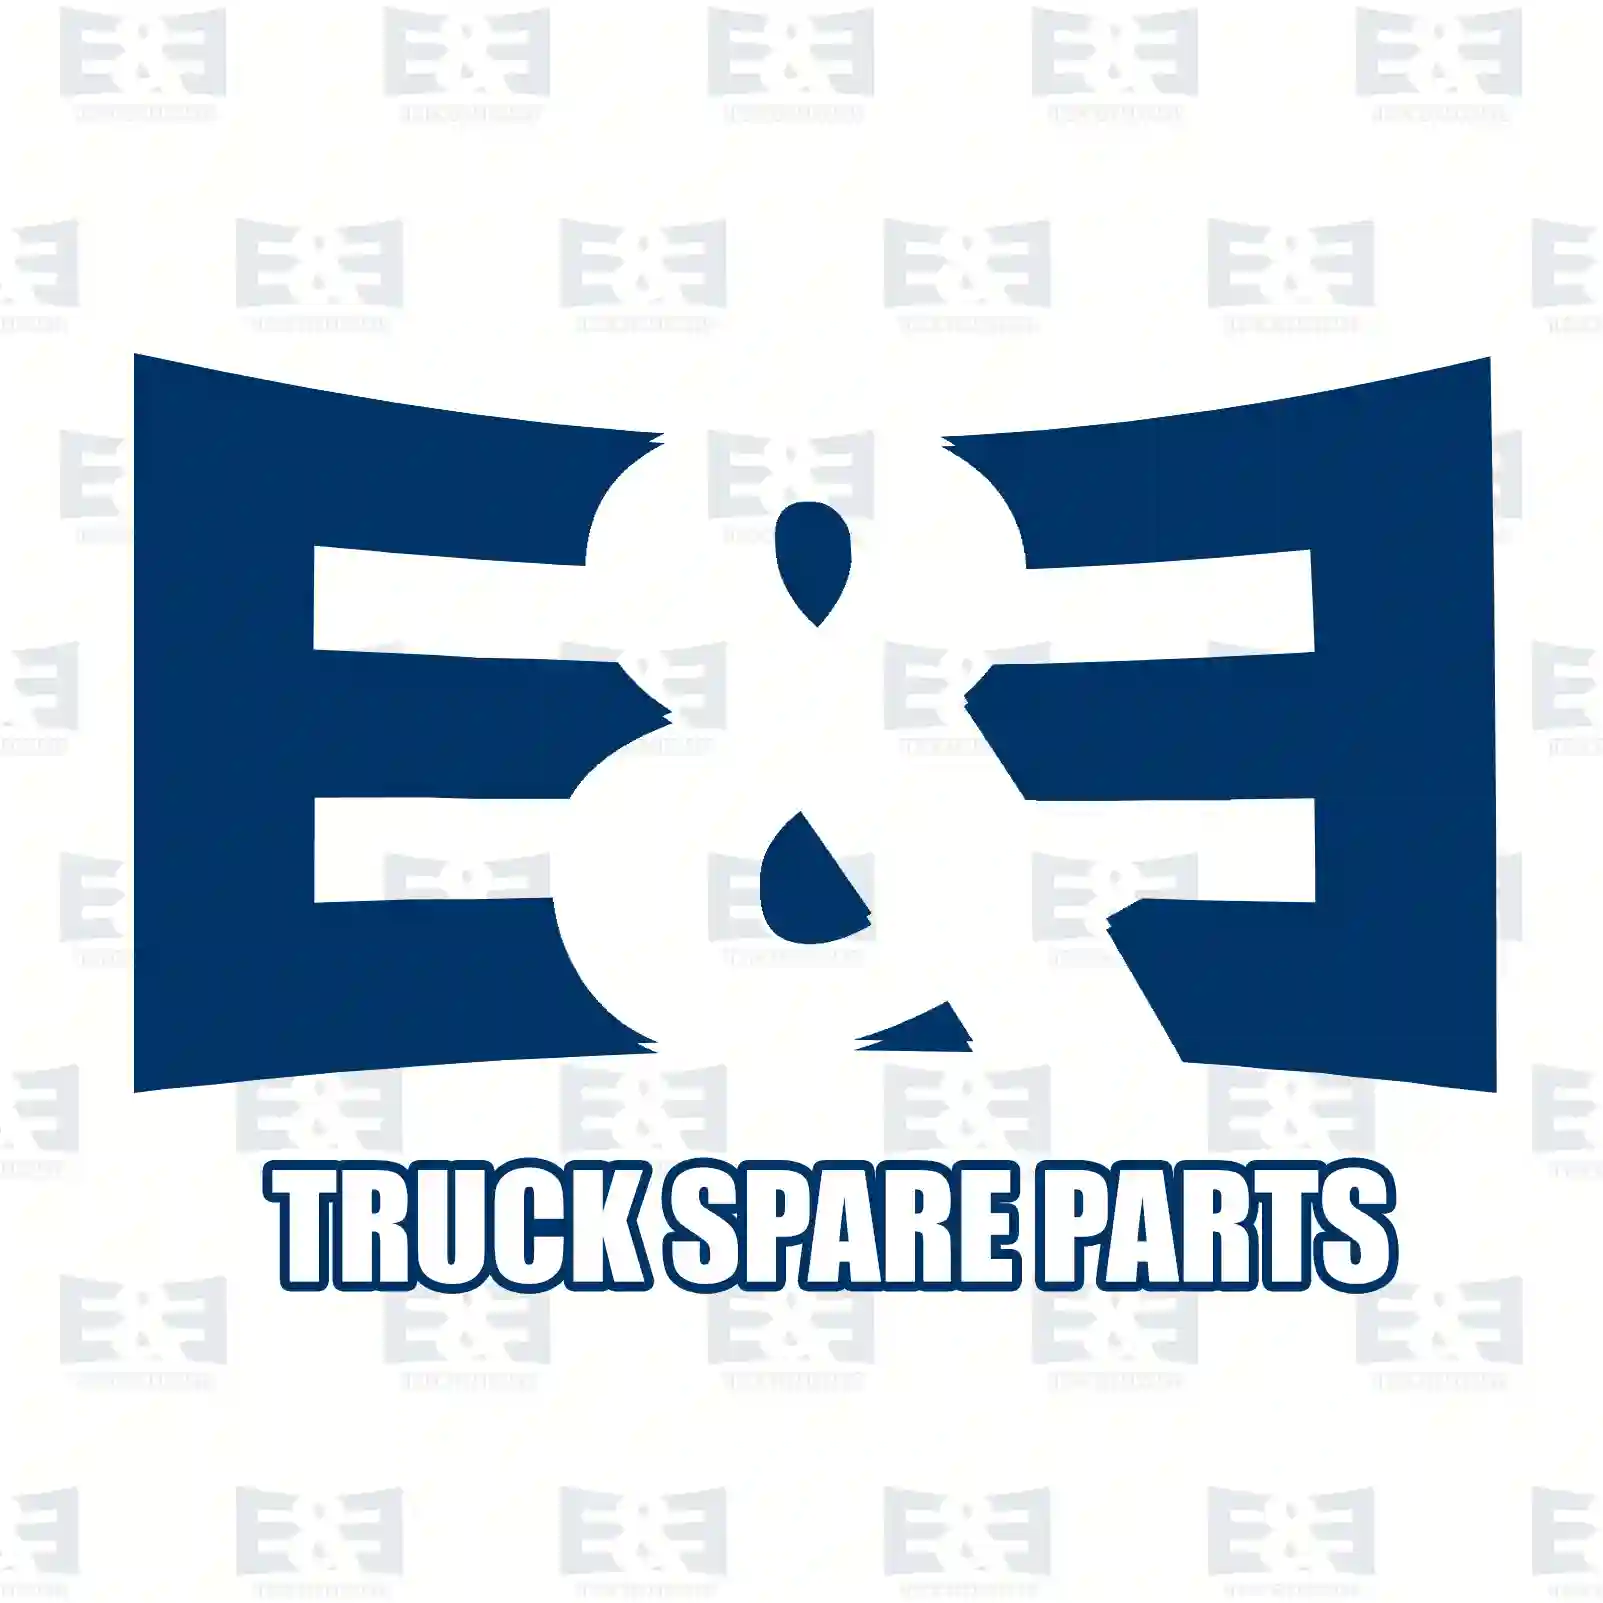 Repair kit, hand brake valve, 2E2296538, 0513799, 513799, FBU8601, 81523156143, 5000821903, 1350477, 276081 ||  2E2296538 E&E Truck Spare Parts | Truck Spare Parts, Auotomotive Spare Parts Repair kit, hand brake valve, 2E2296538, 0513799, 513799, FBU8601, 81523156143, 5000821903, 1350477, 276081 ||  2E2296538 E&E Truck Spare Parts | Truck Spare Parts, Auotomotive Spare Parts